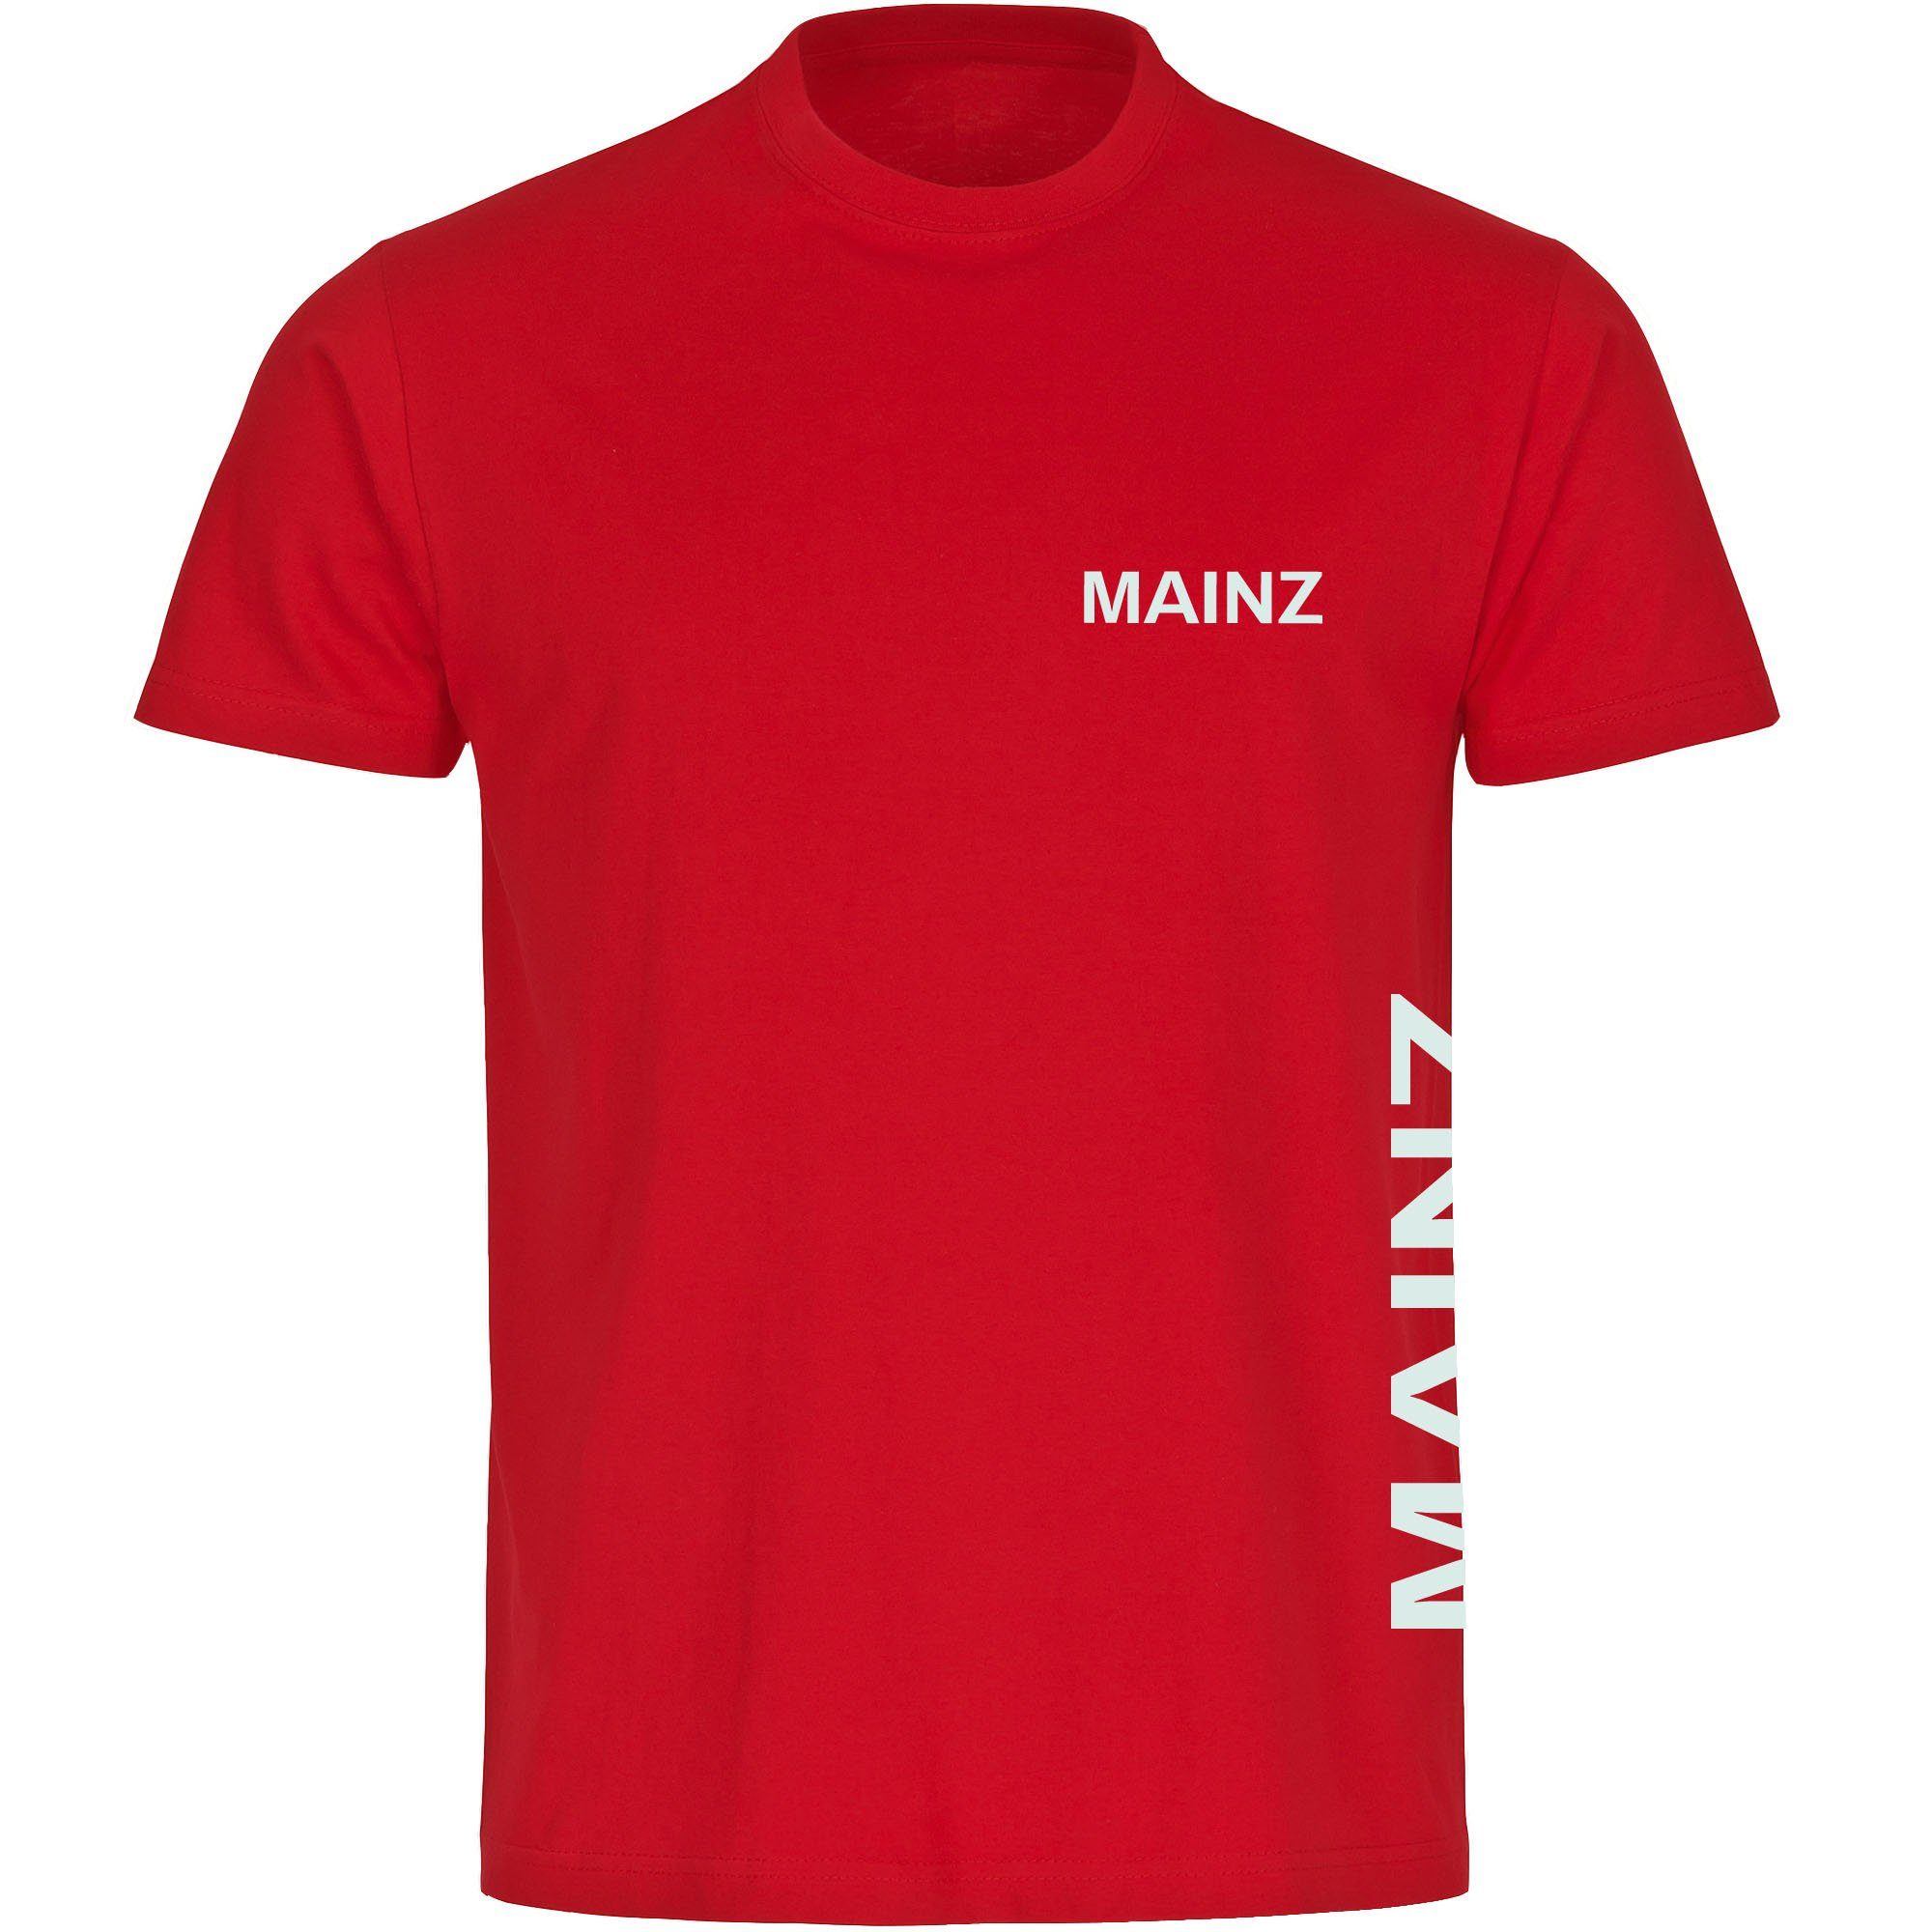 multifanshop T-Shirt Kinder Mainz - Brust & Seite - Boy Girl